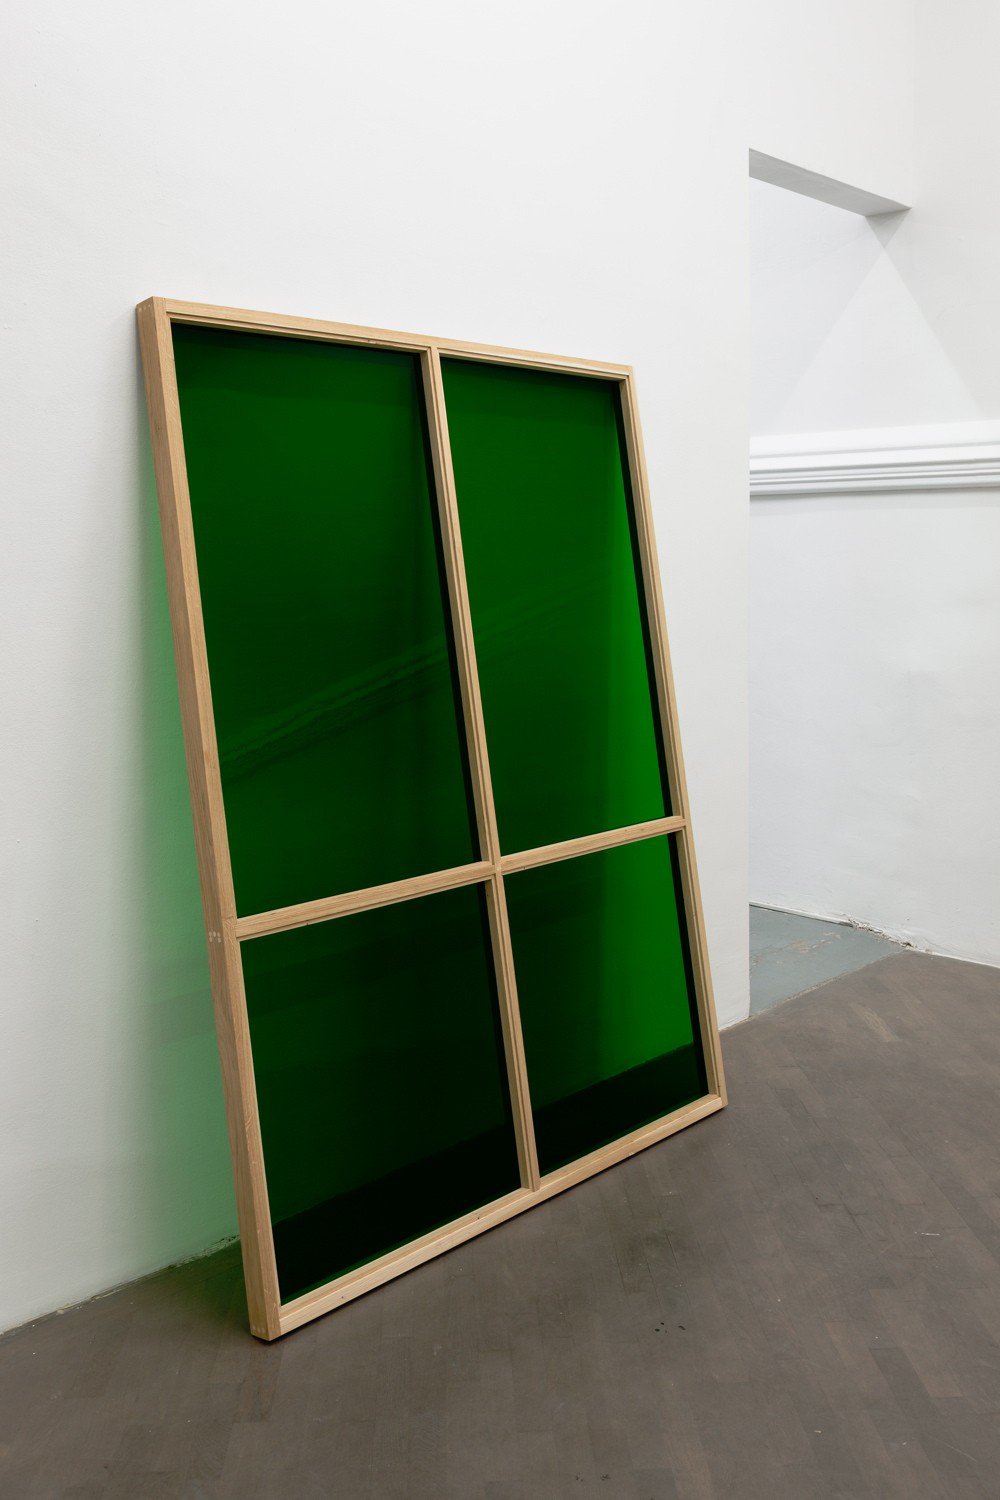 Marius EnghNero Window, 2013Stained green glass, oak frame199.5 x 150 x 6 cm